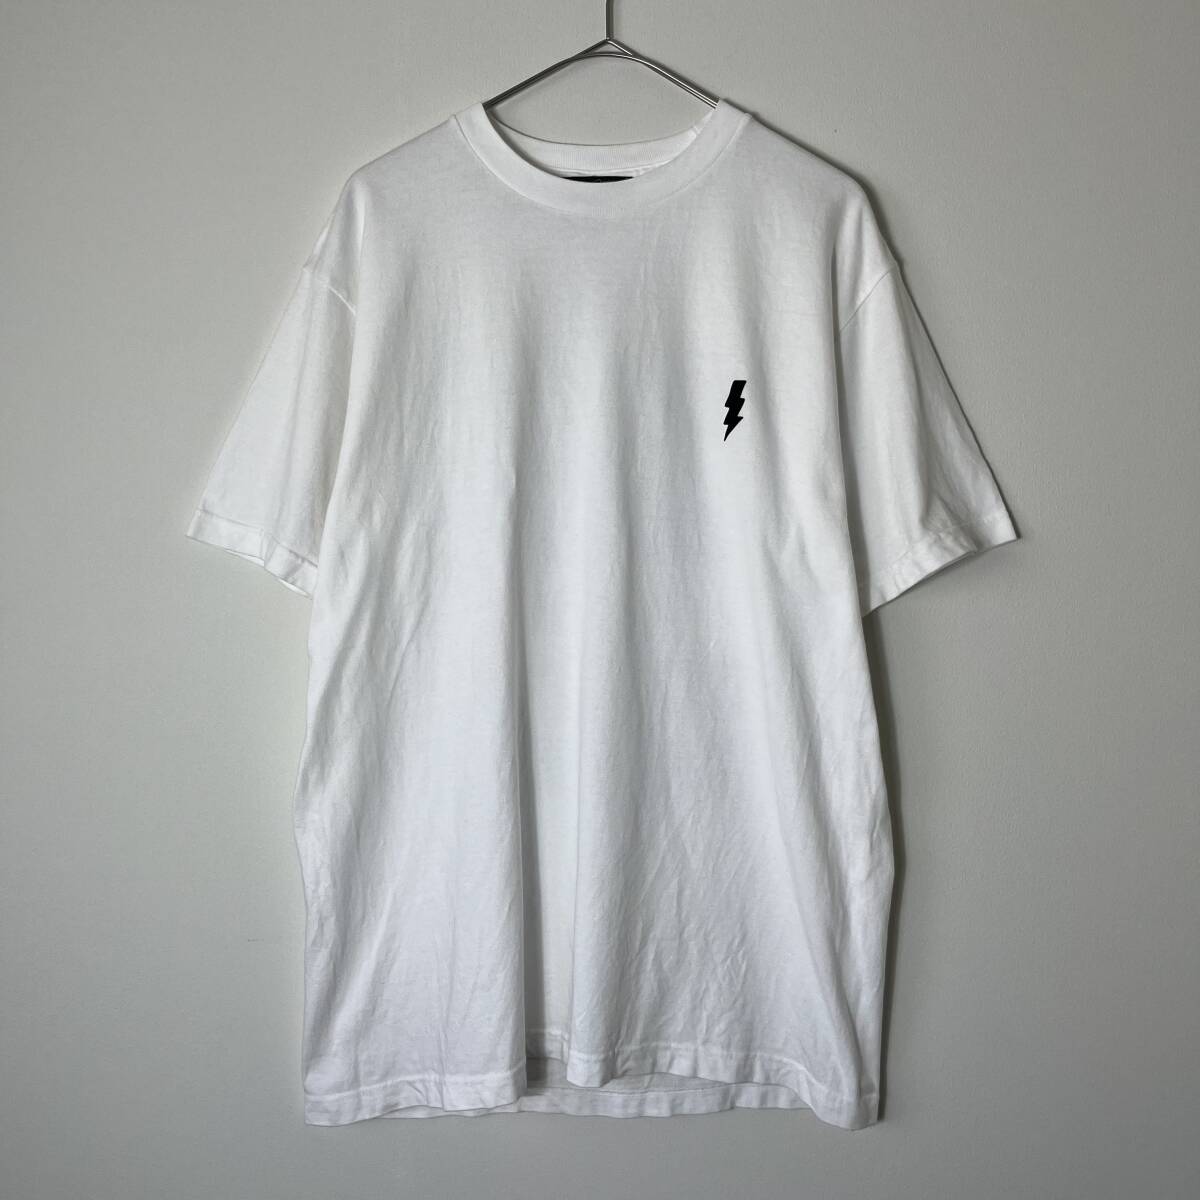 BALABUSHKA REMNANTS バラブシュカレムナンツ サイズ3 Tシャツ バックプリント ワンポイント 半袖 ホワイト_画像2